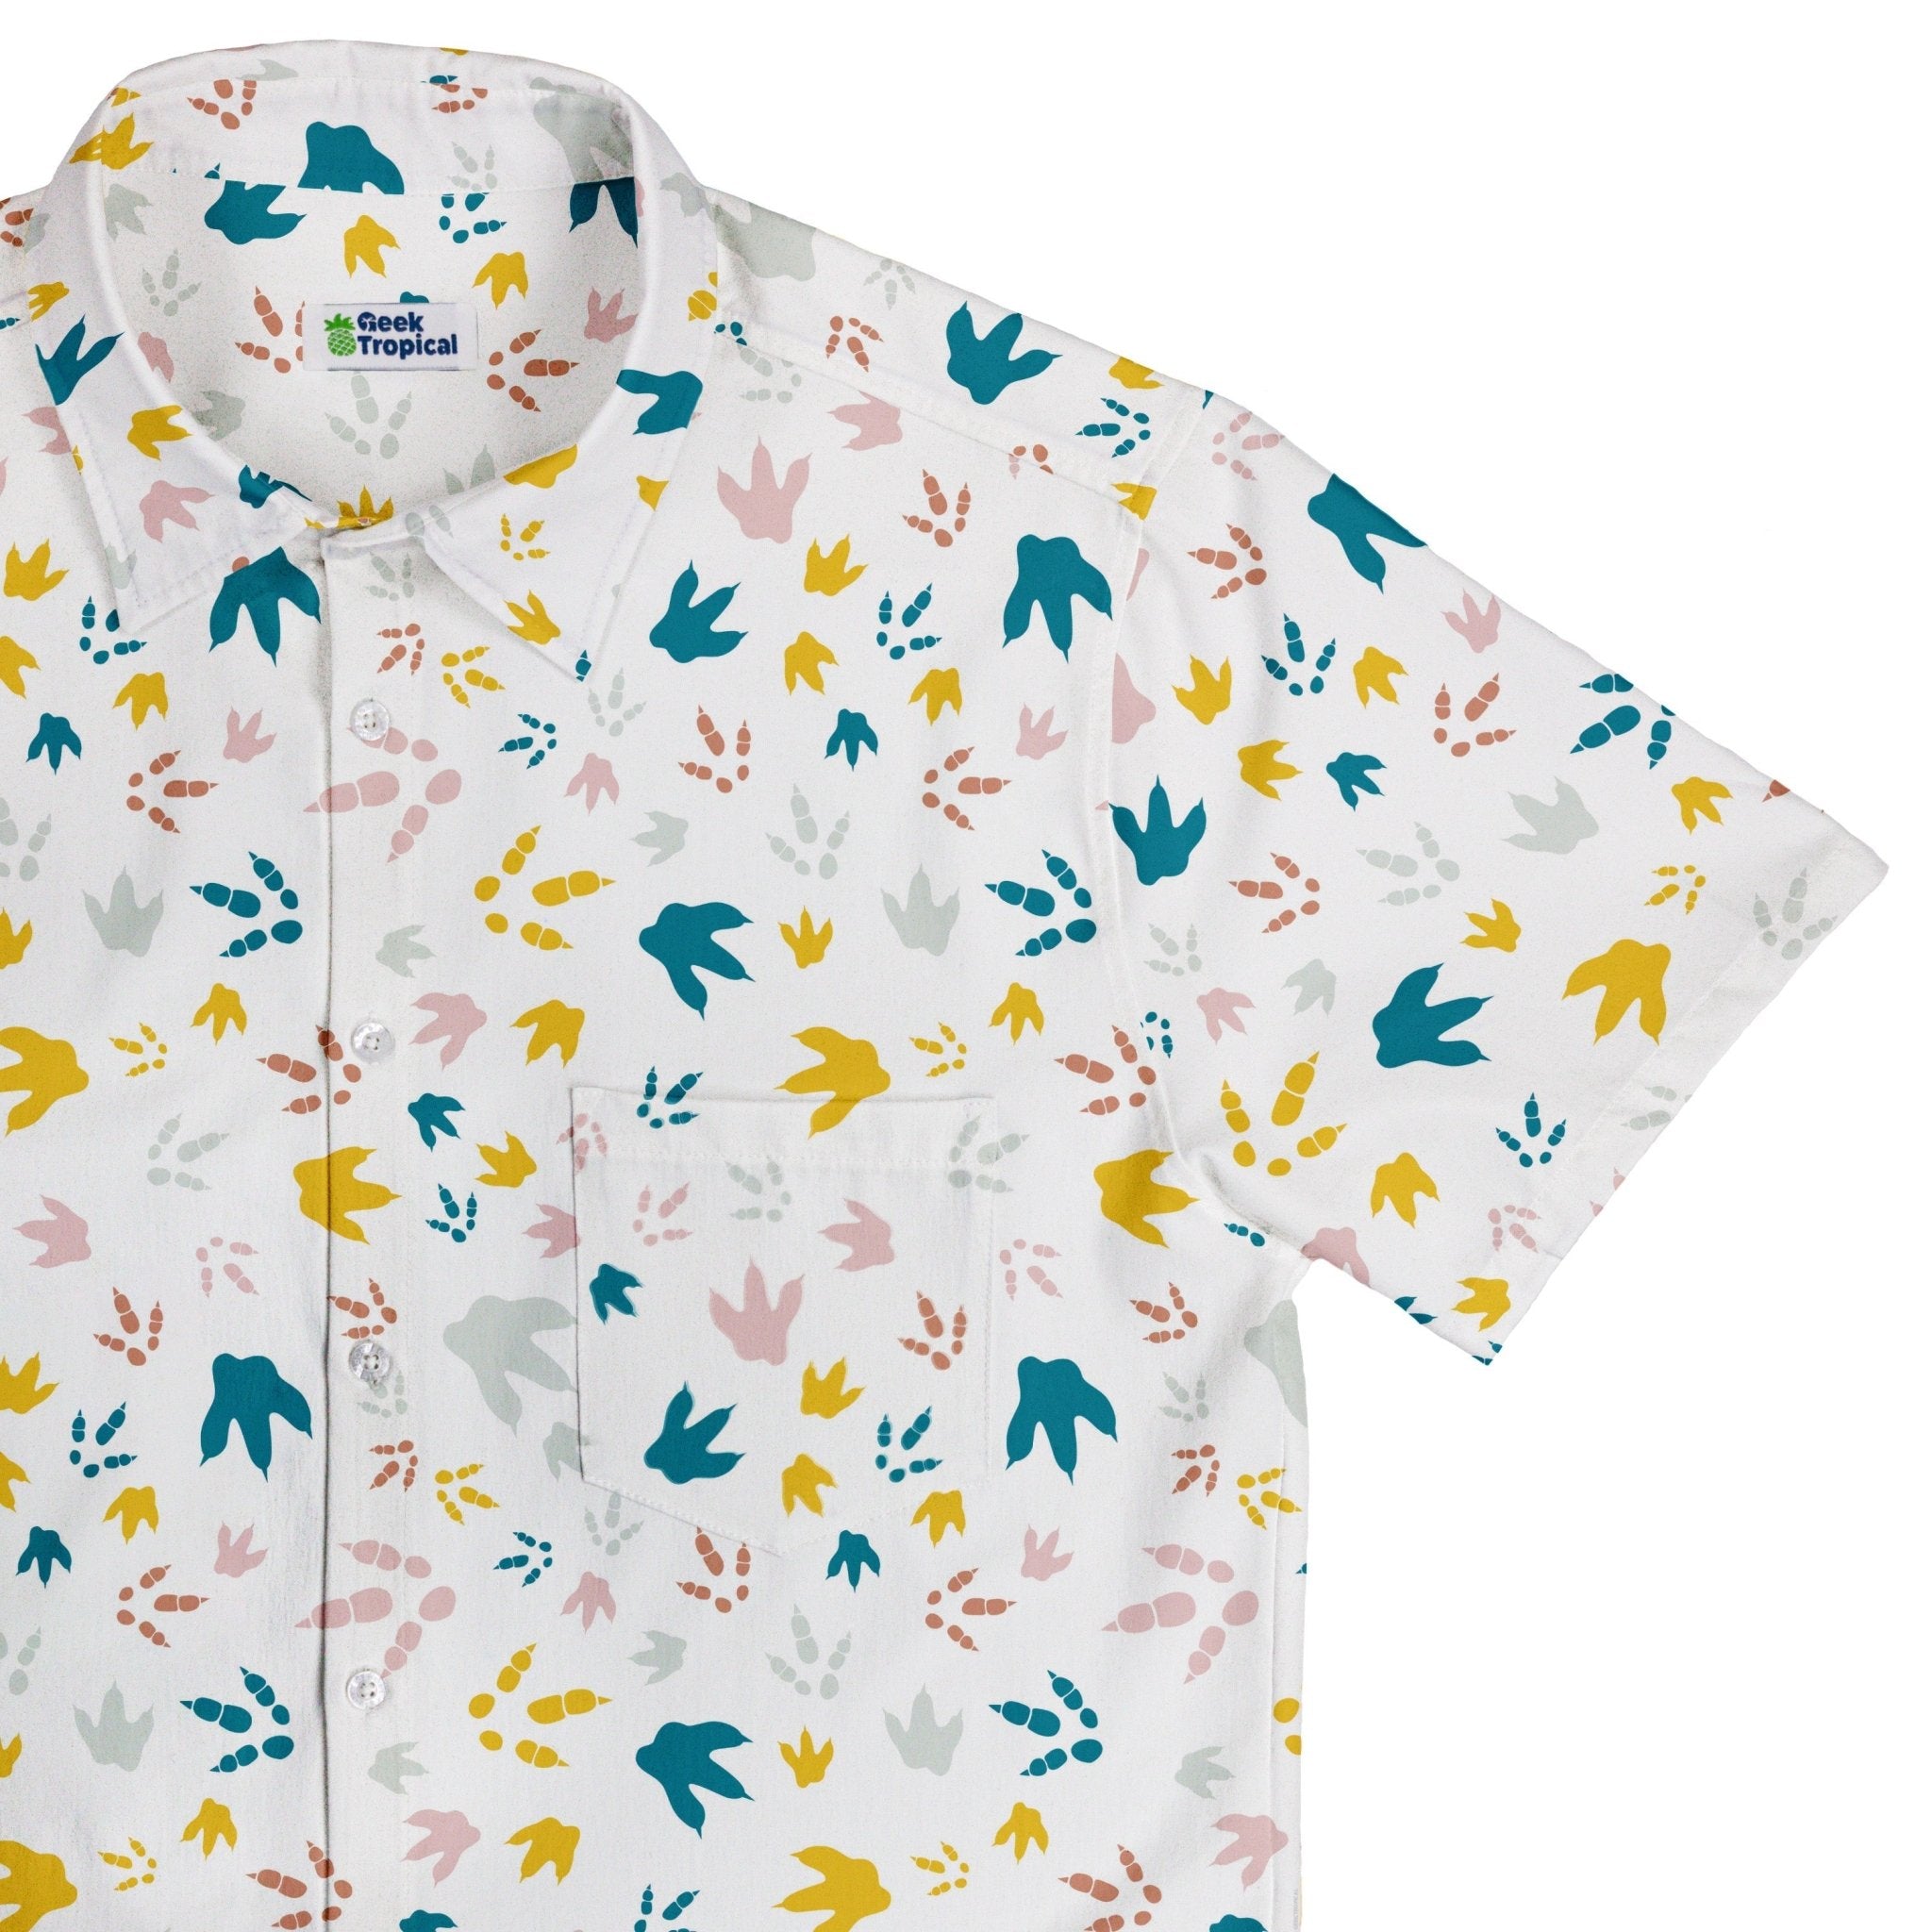 Dinosaur Footprint Tracks White Button Up Shirt - adult sizing - dinosaur print - Simple Patterns